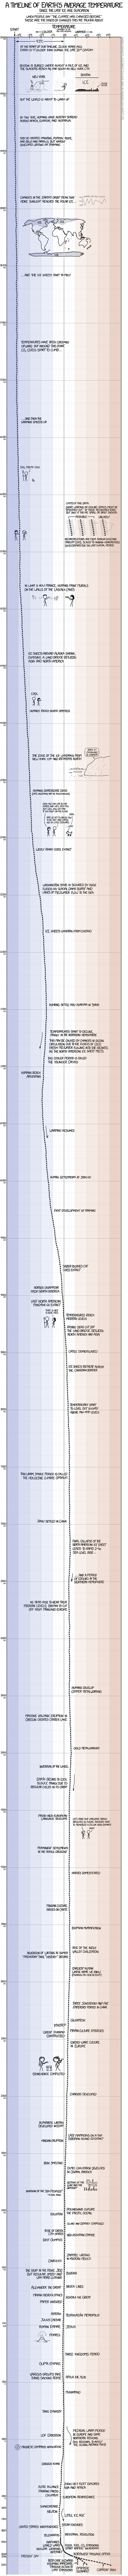 Earth average temperature timeline